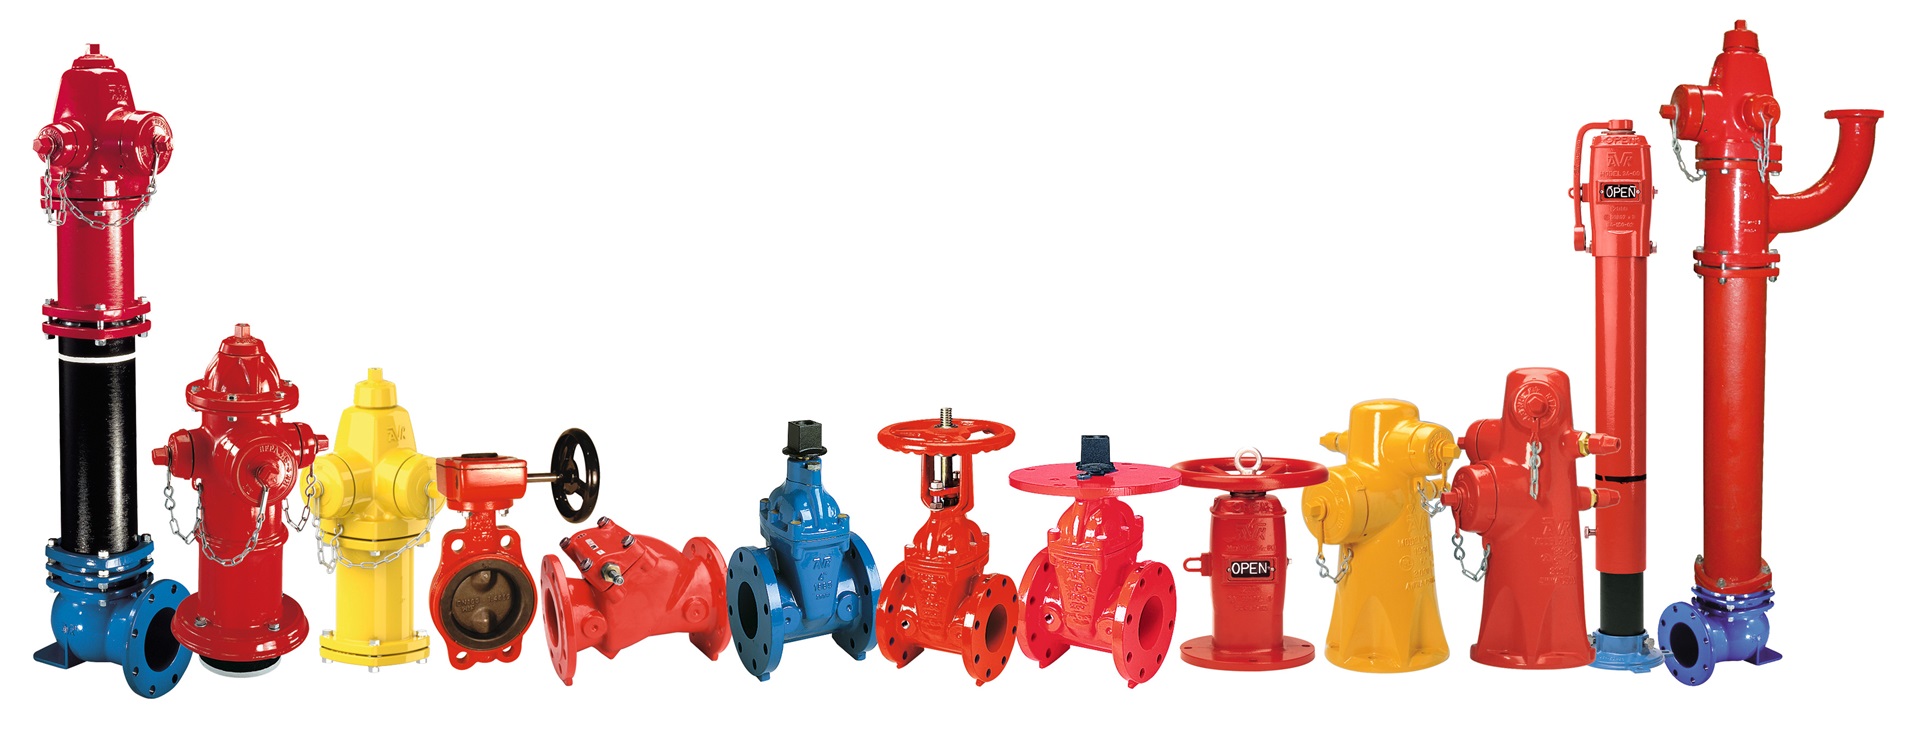 Fire valve series in AVK